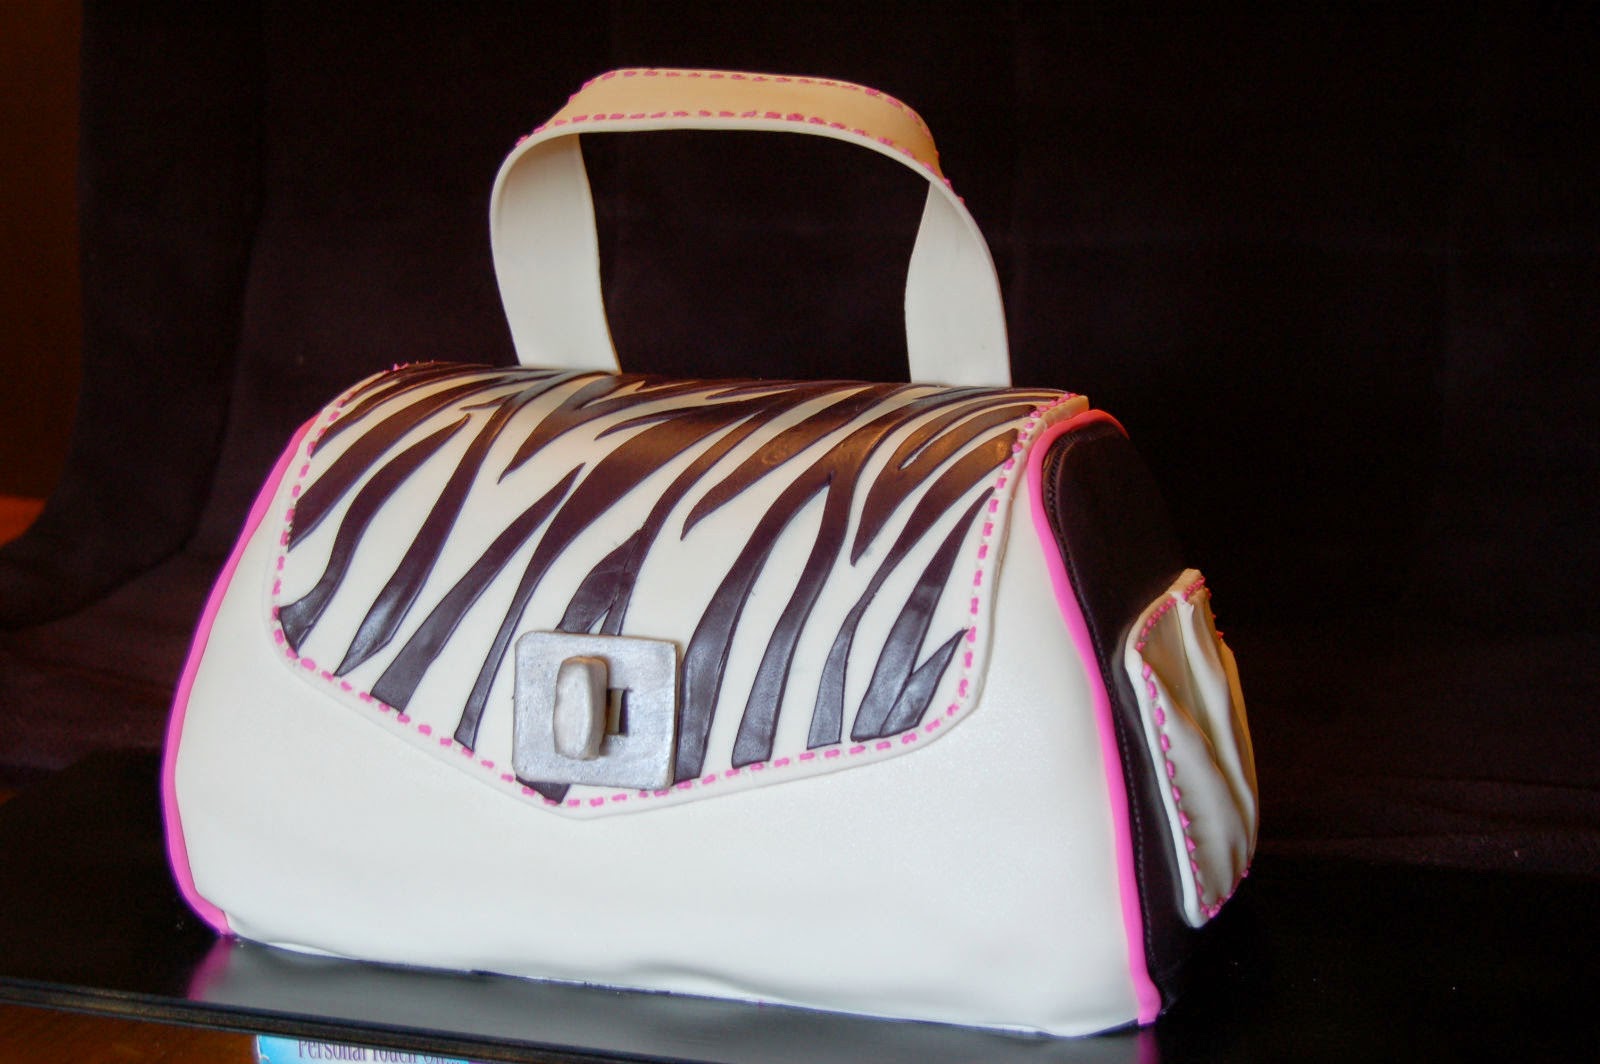 an interesting zebra cake decorating handbags shape